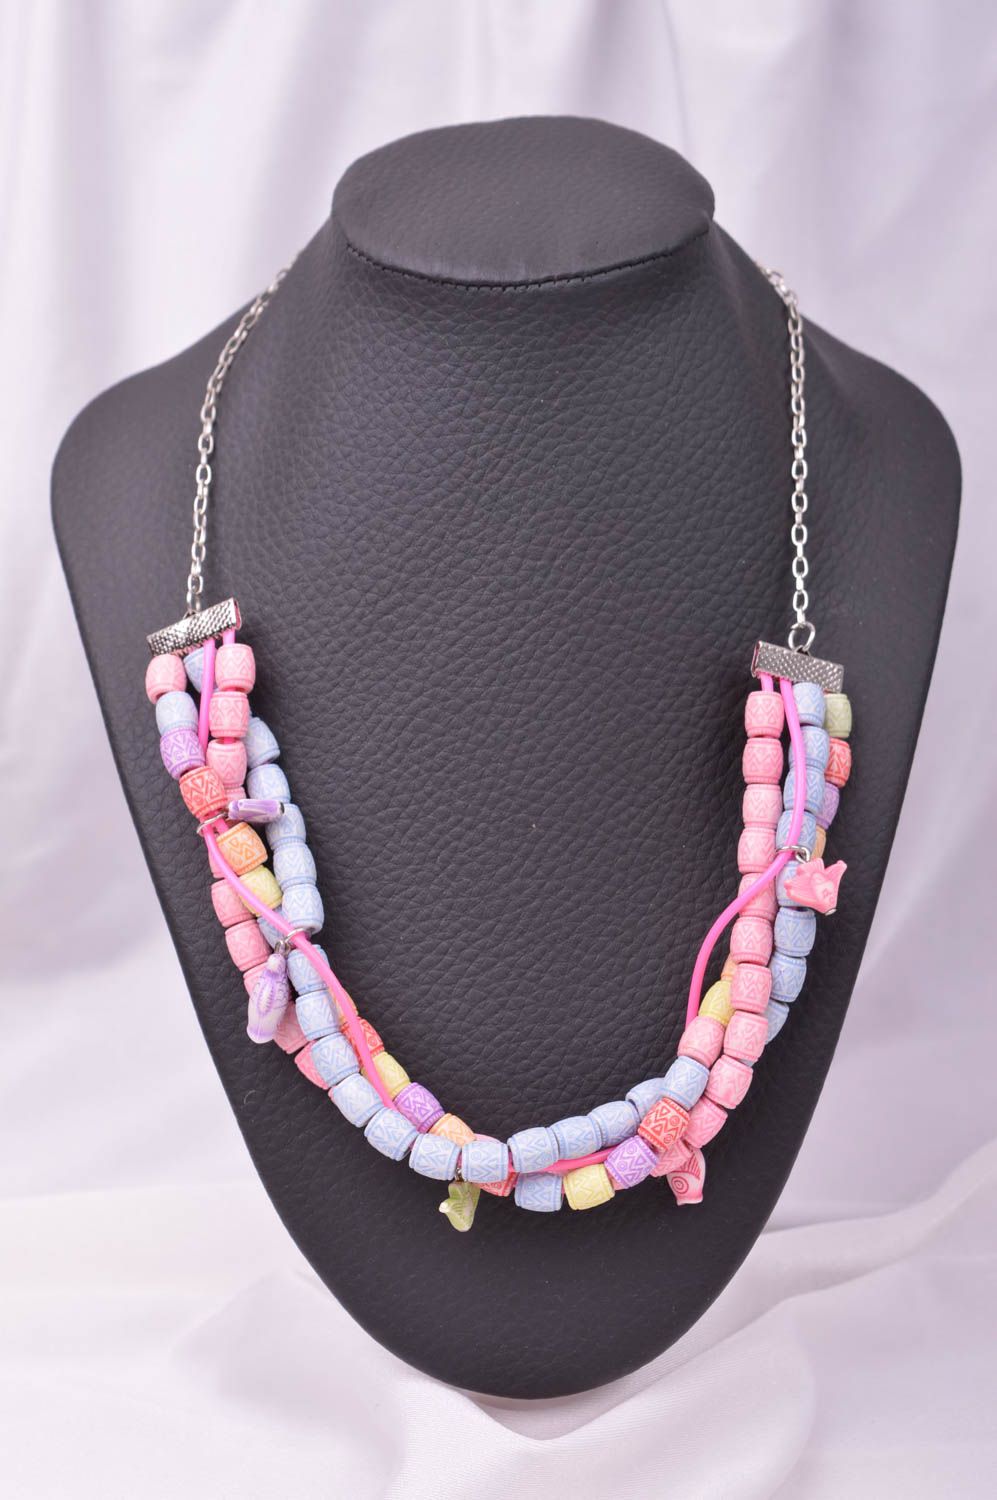 Unusual handmade necklace plastic necklace design costume jewelry gift ideas photo 1